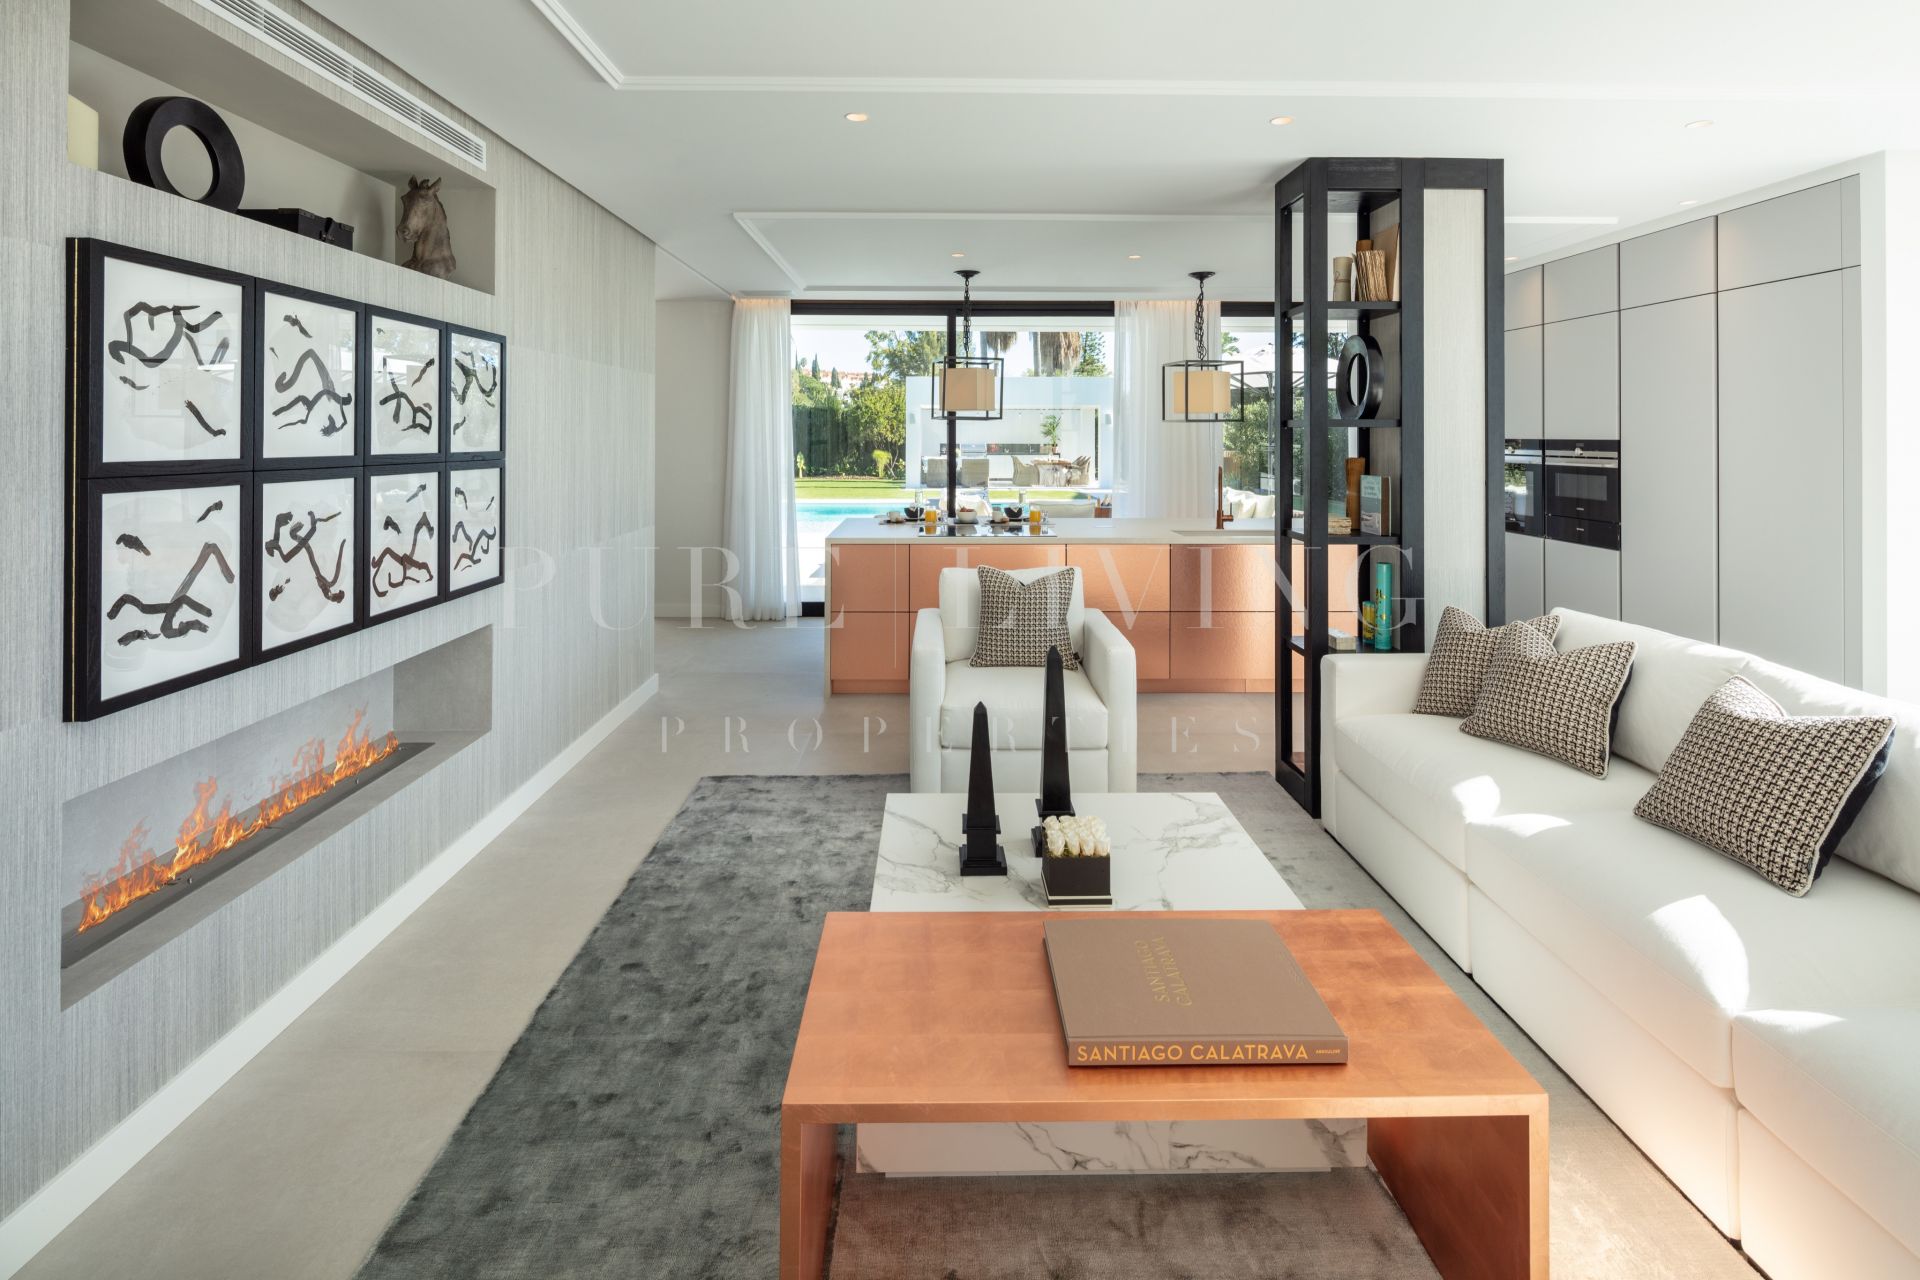 Four bedroom stunning luxury villa is located in the prestigious Nueva Andalucia area.